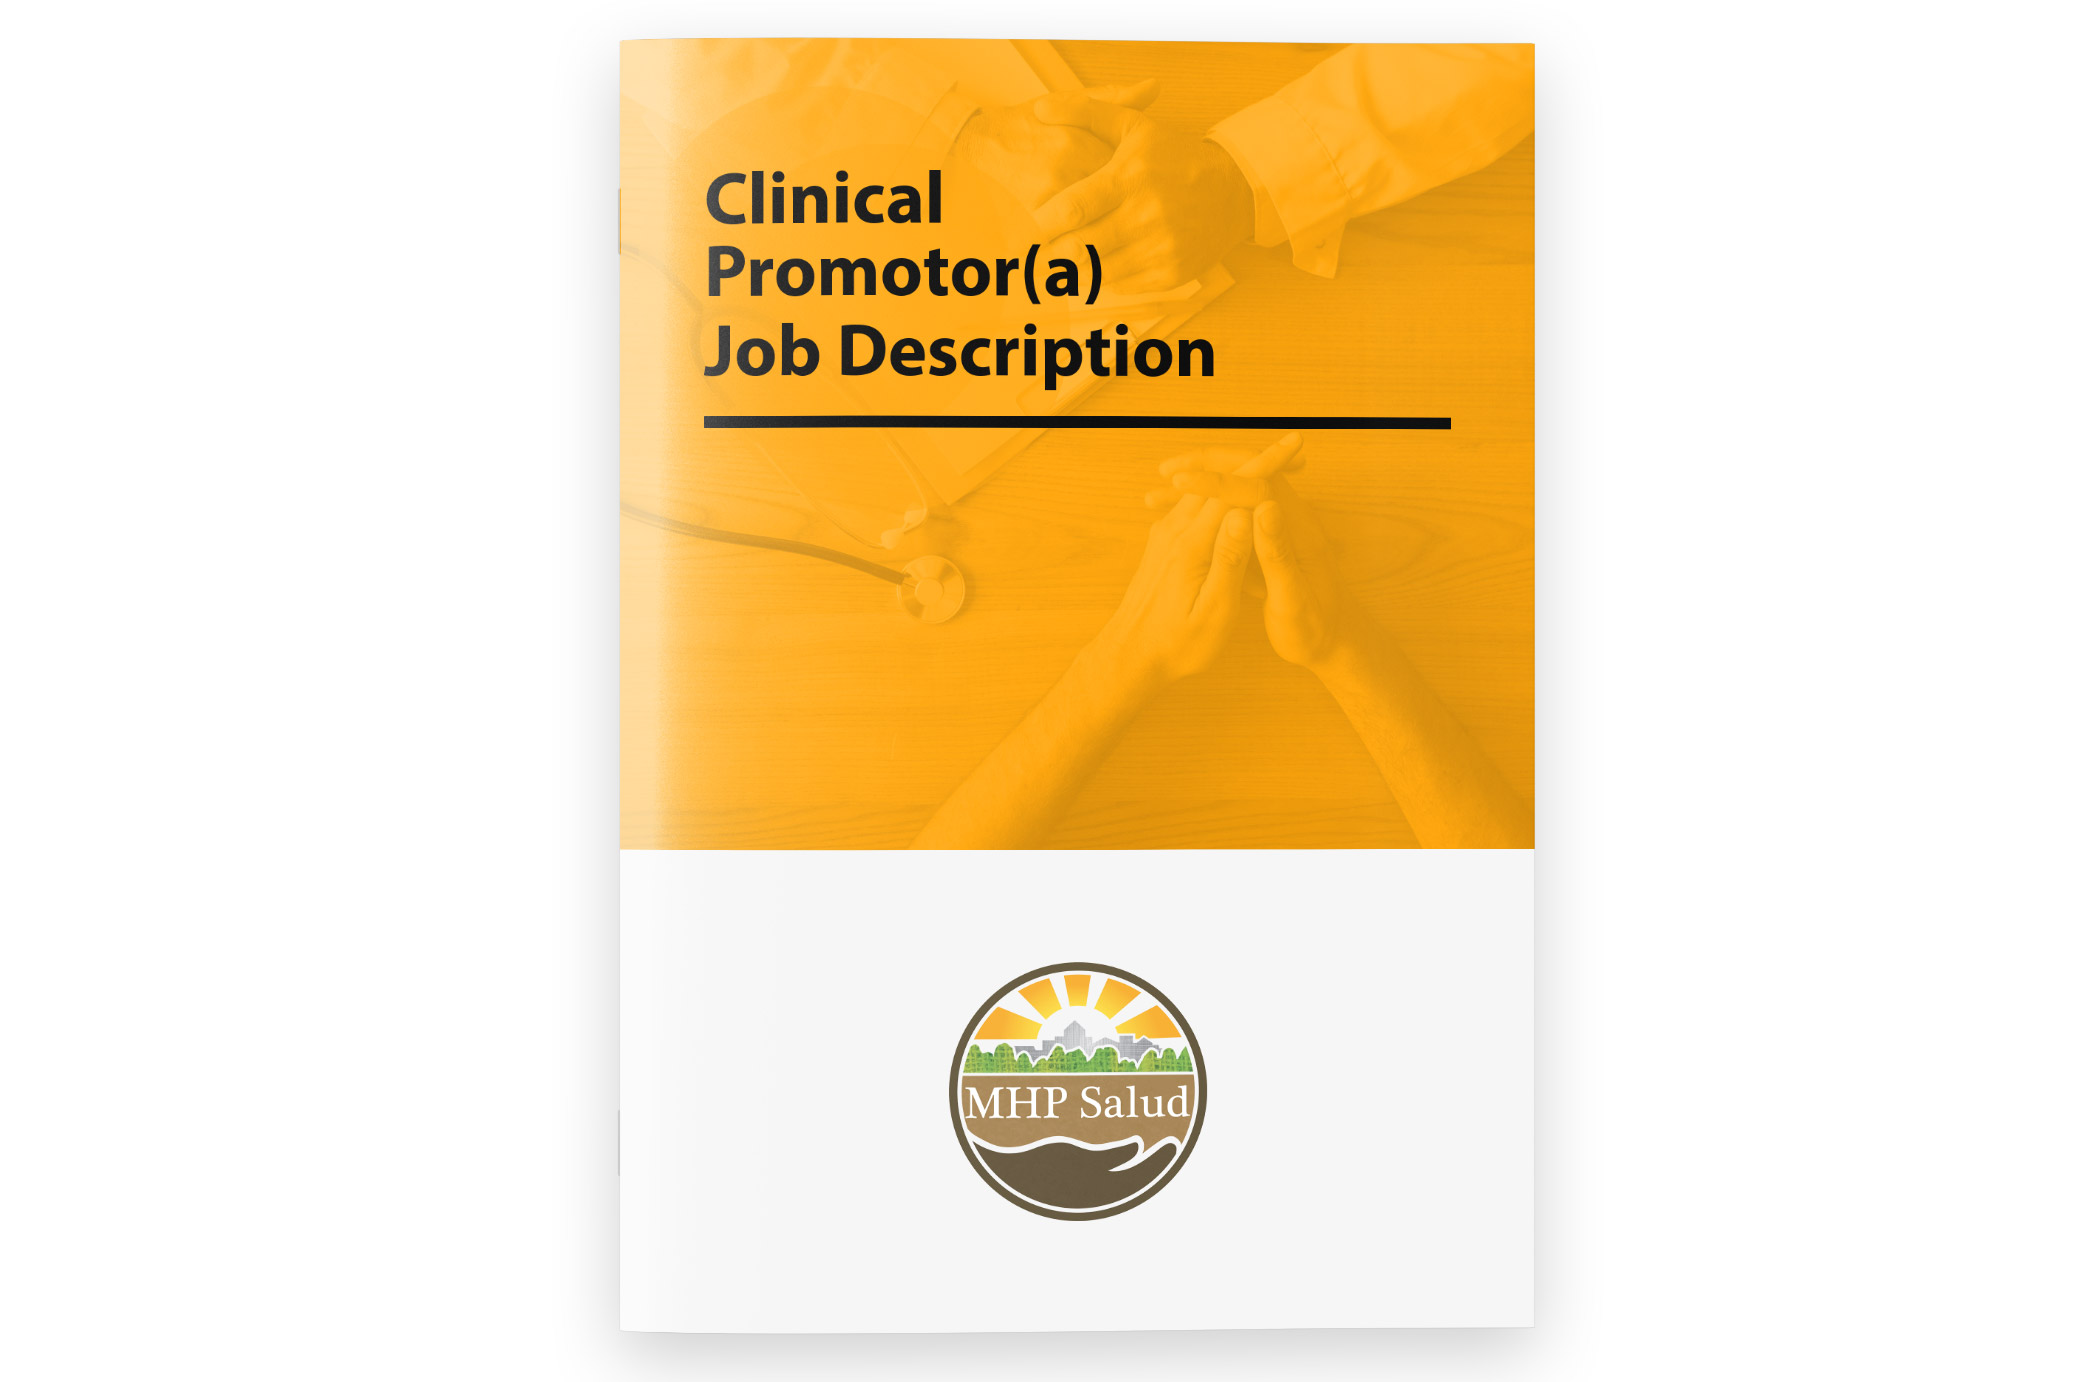 The Clinical Promotor(a) Job Description document.